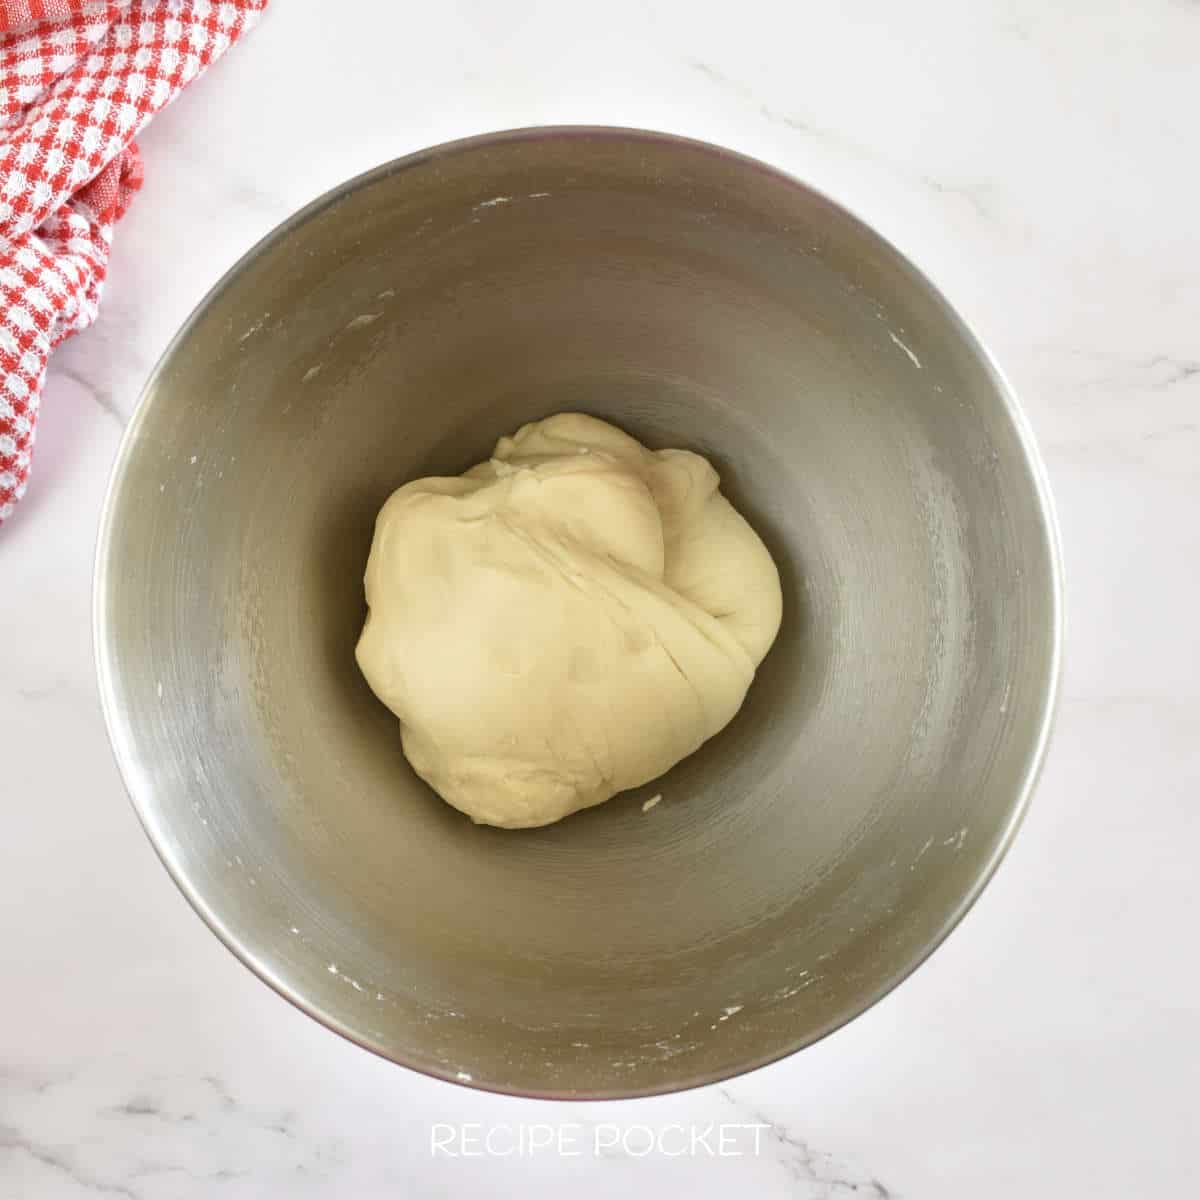 Kneaded bread dough.